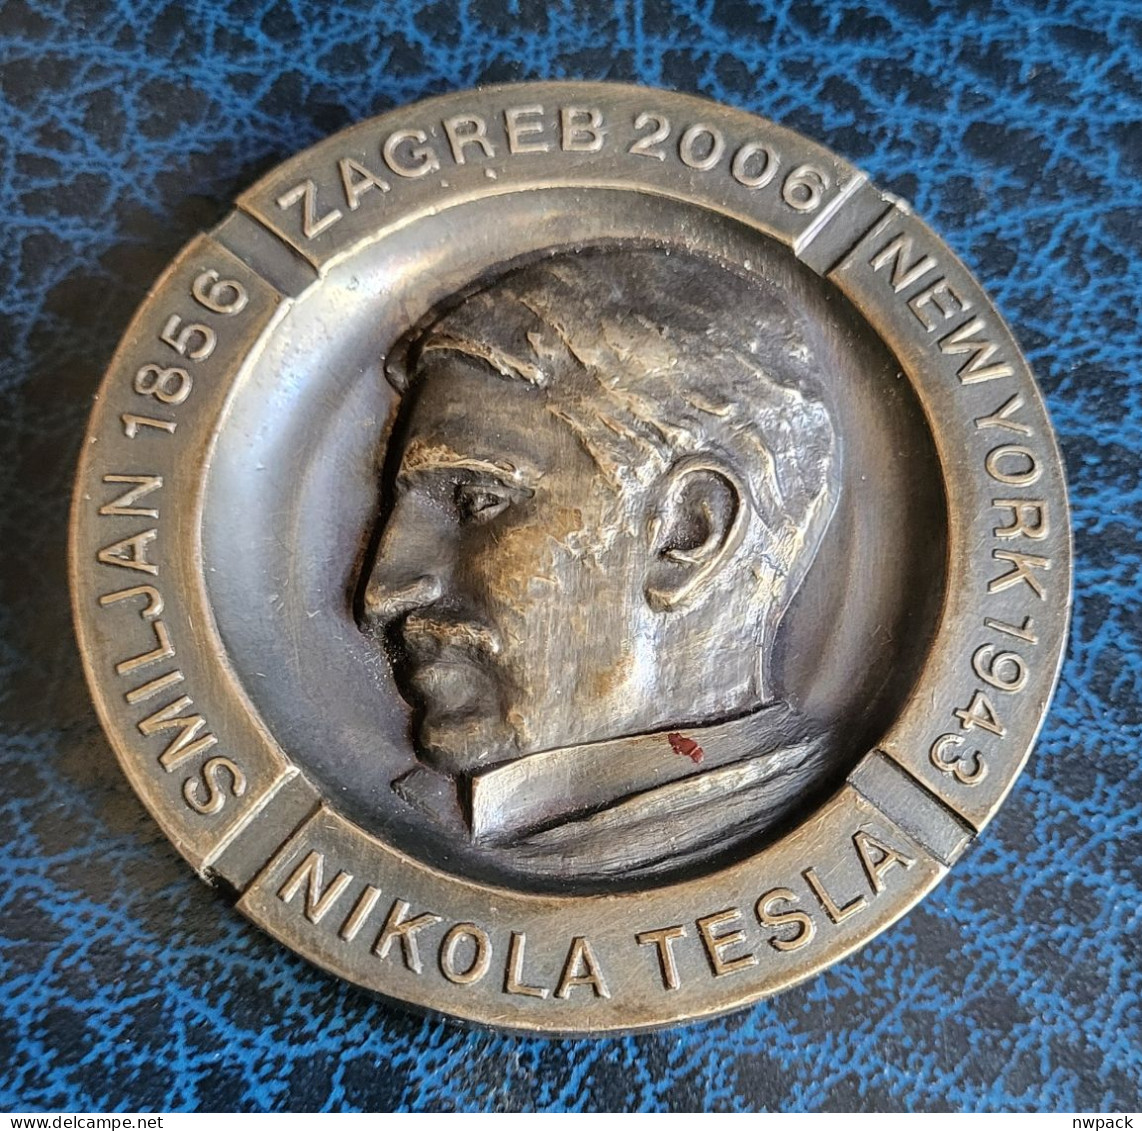 NIKOLA TESLA - CROATIA - AWARD - Medal / Plaque In Casse (BOX) - Other Apparatus